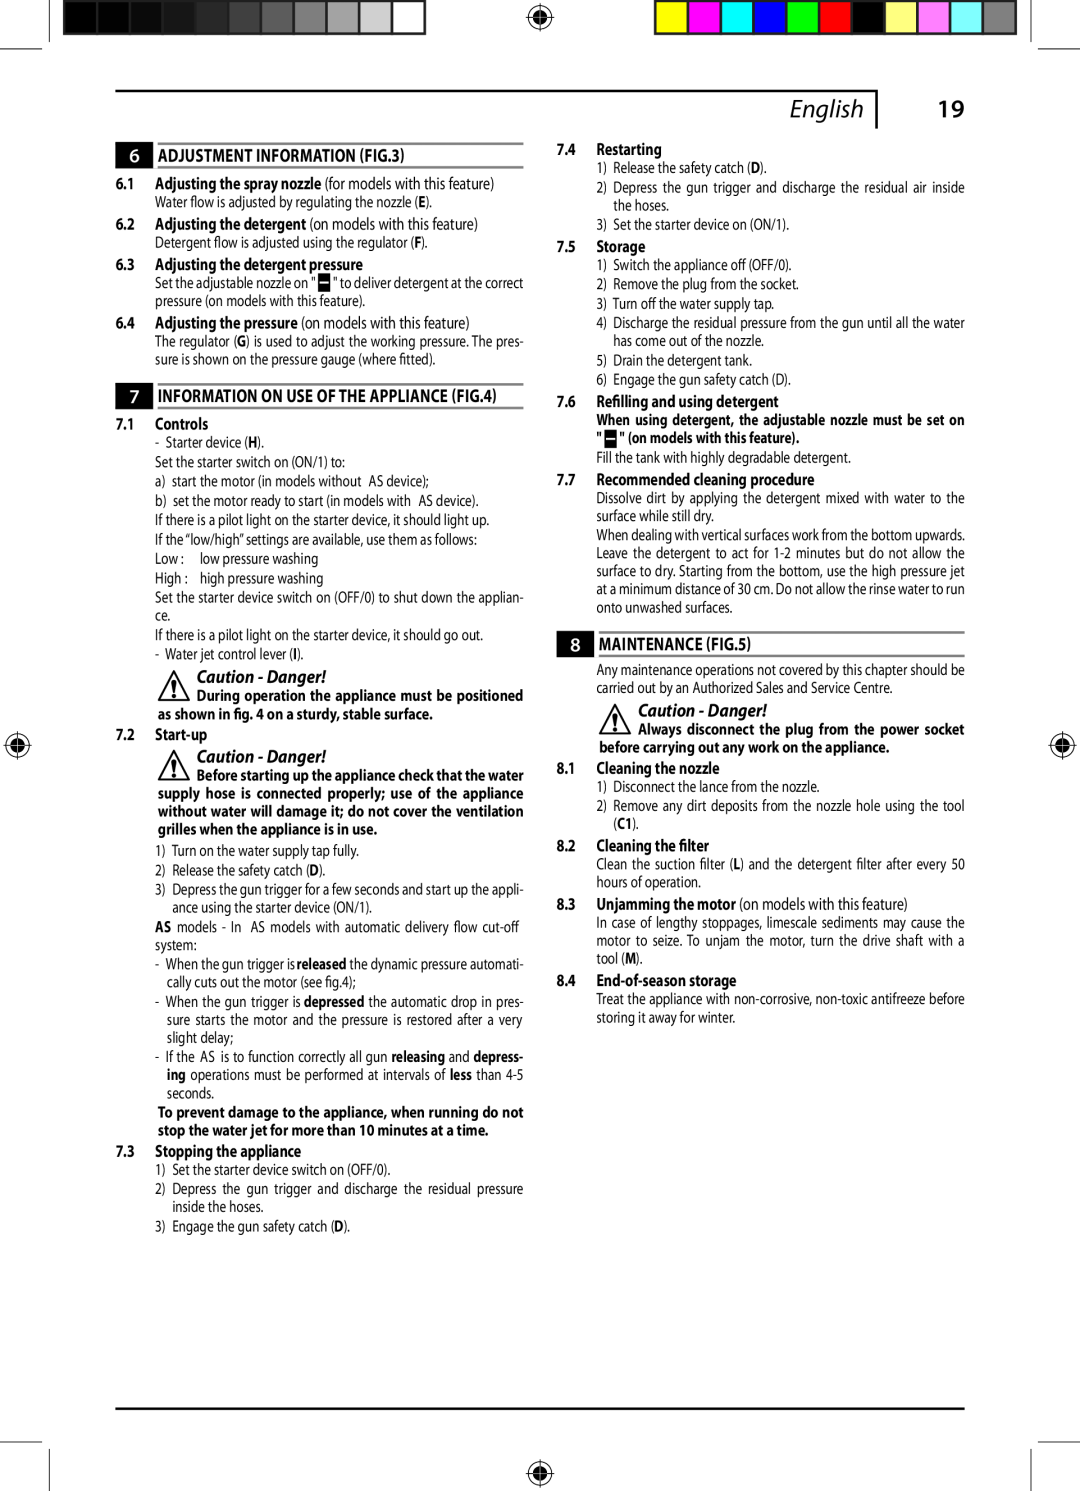 Black & Decker PW1550, 662275-02 instruction manual English, Adjustment Information, Maintenance, Caution - Danger 